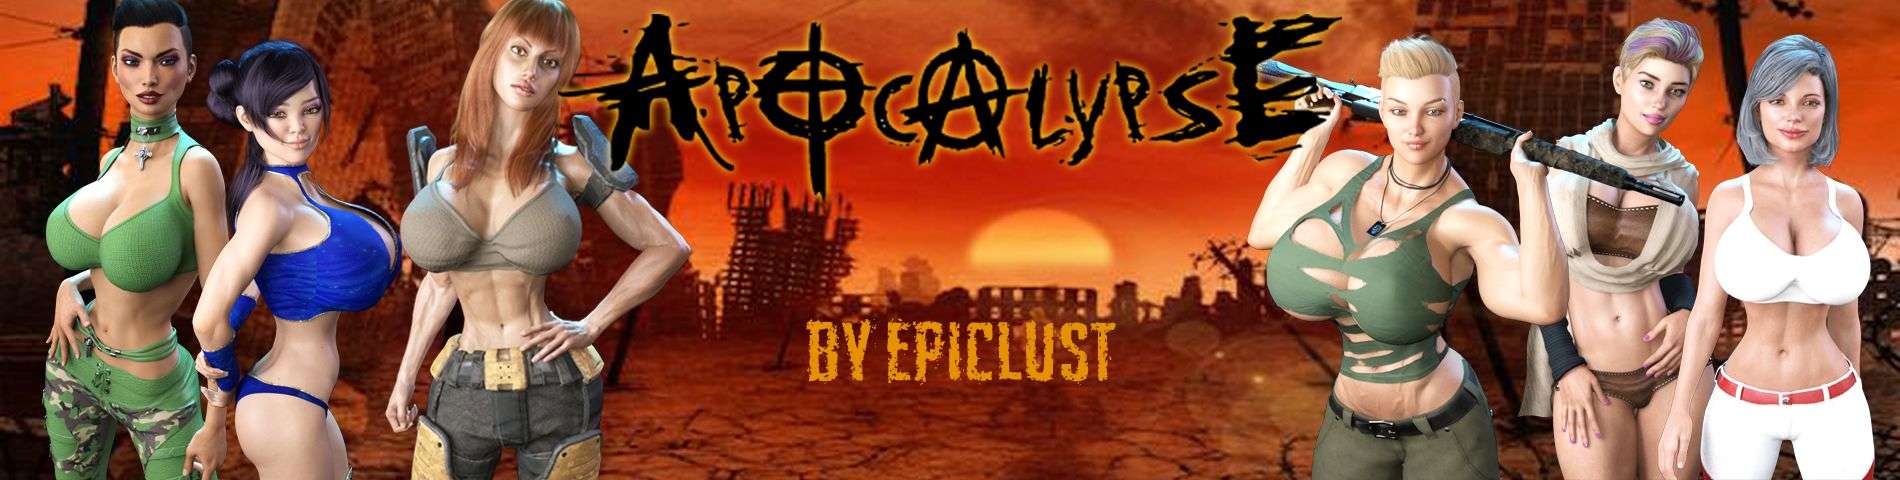 Apocalypse [EpicLust] Adult xxx Game Download